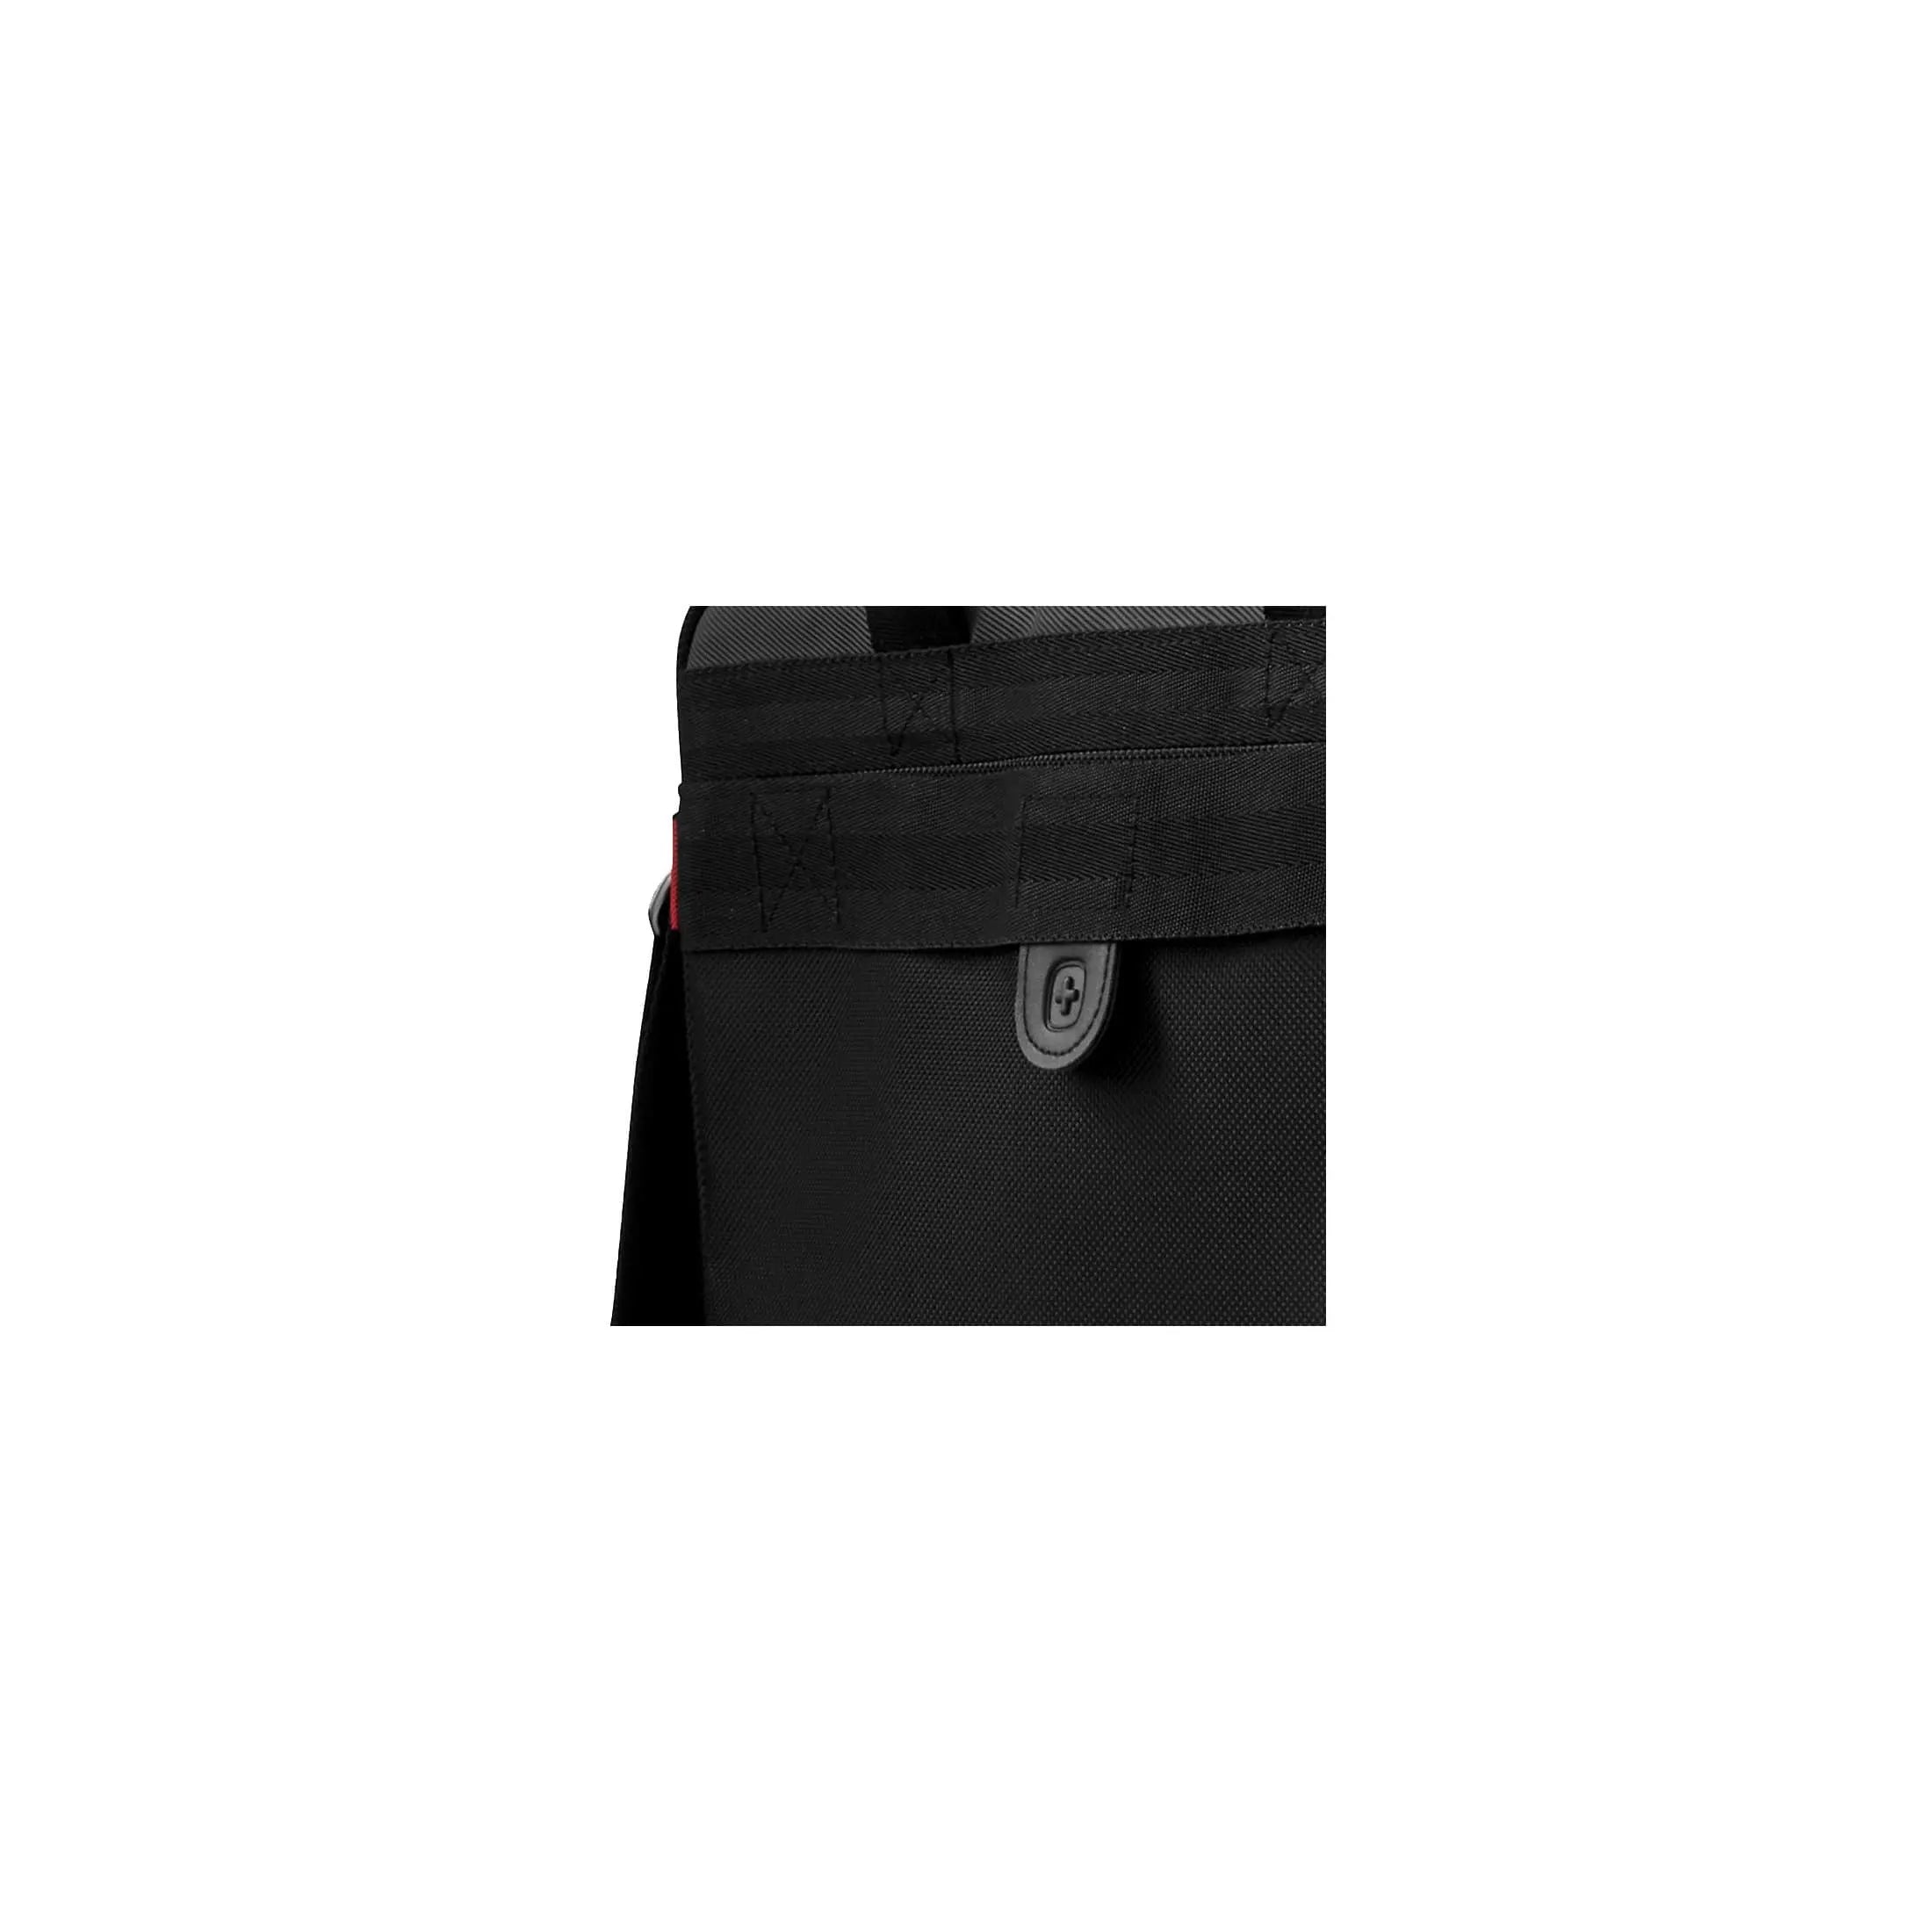 Wenger Legacy 16 laptop briefcase 40 cm - black-grey